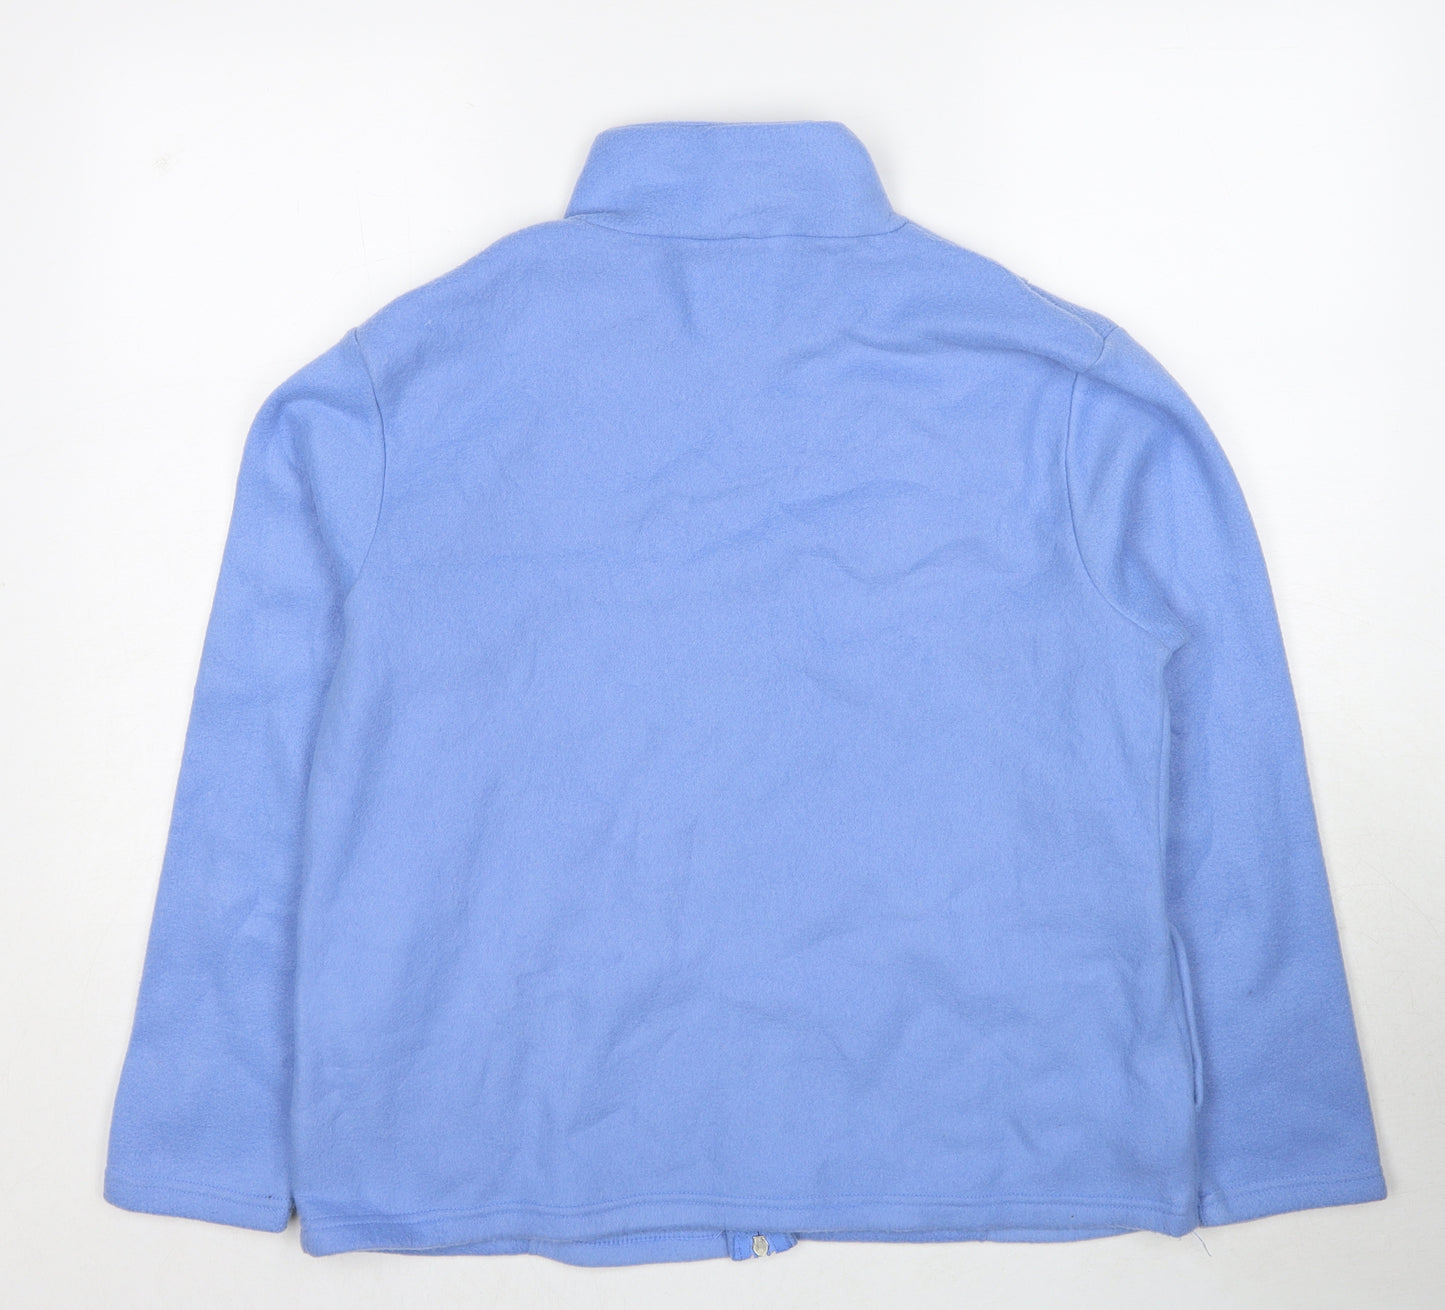 Anne de Lancey Womens Blue Jacket Size M Zip